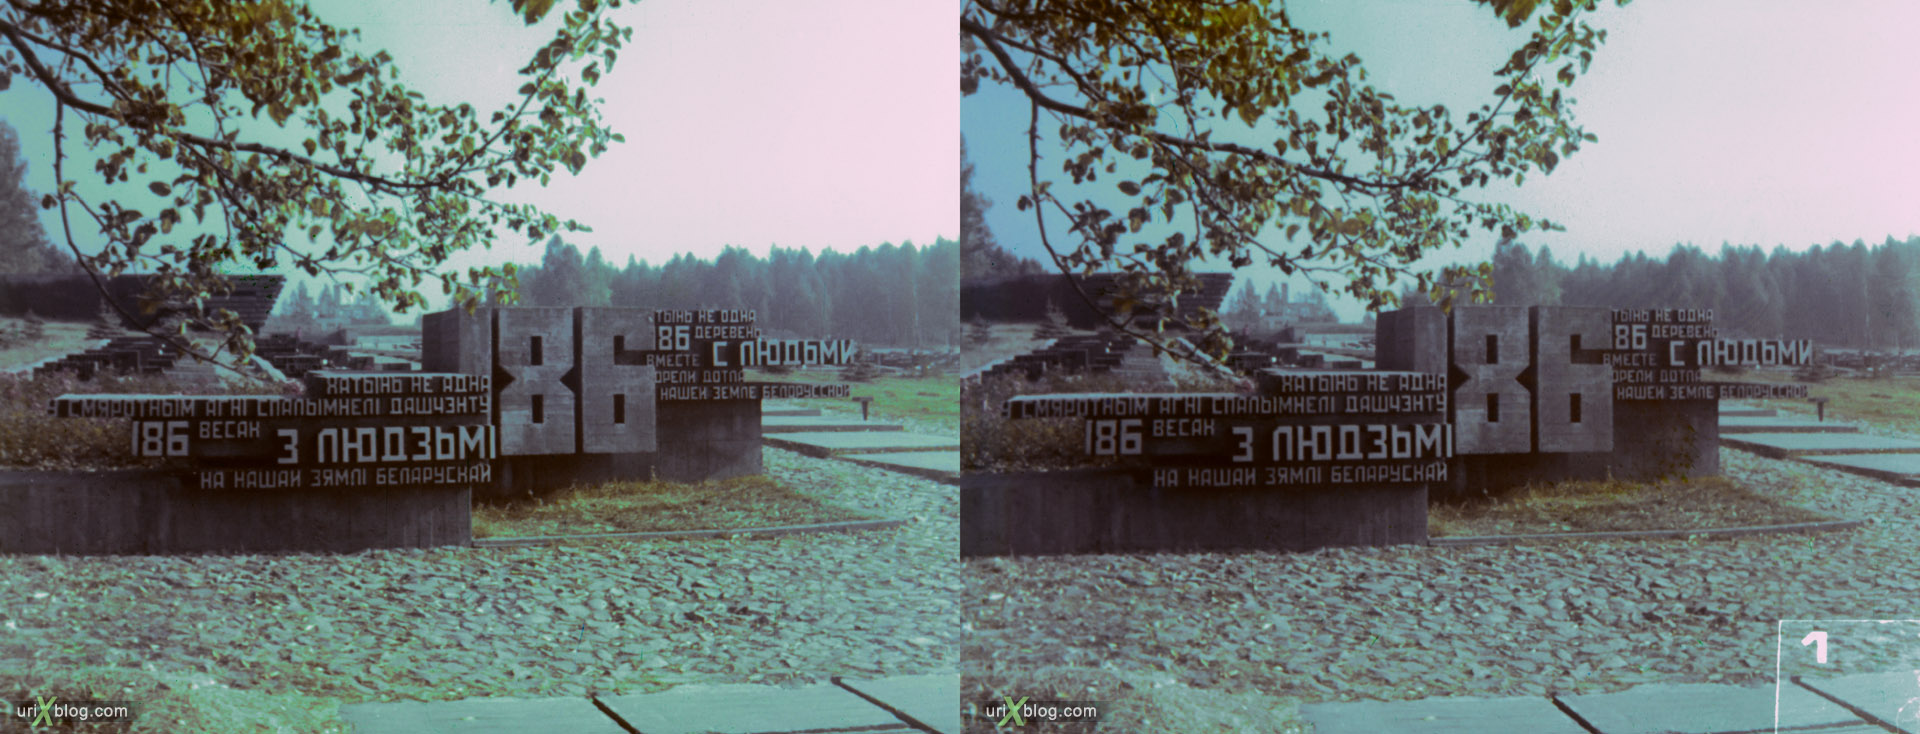 1978, Khatyn Memorial, Belorussia, film, 3D, stereo pair, cross-eyed, crossview, cross view stereo pair, stereoscopic